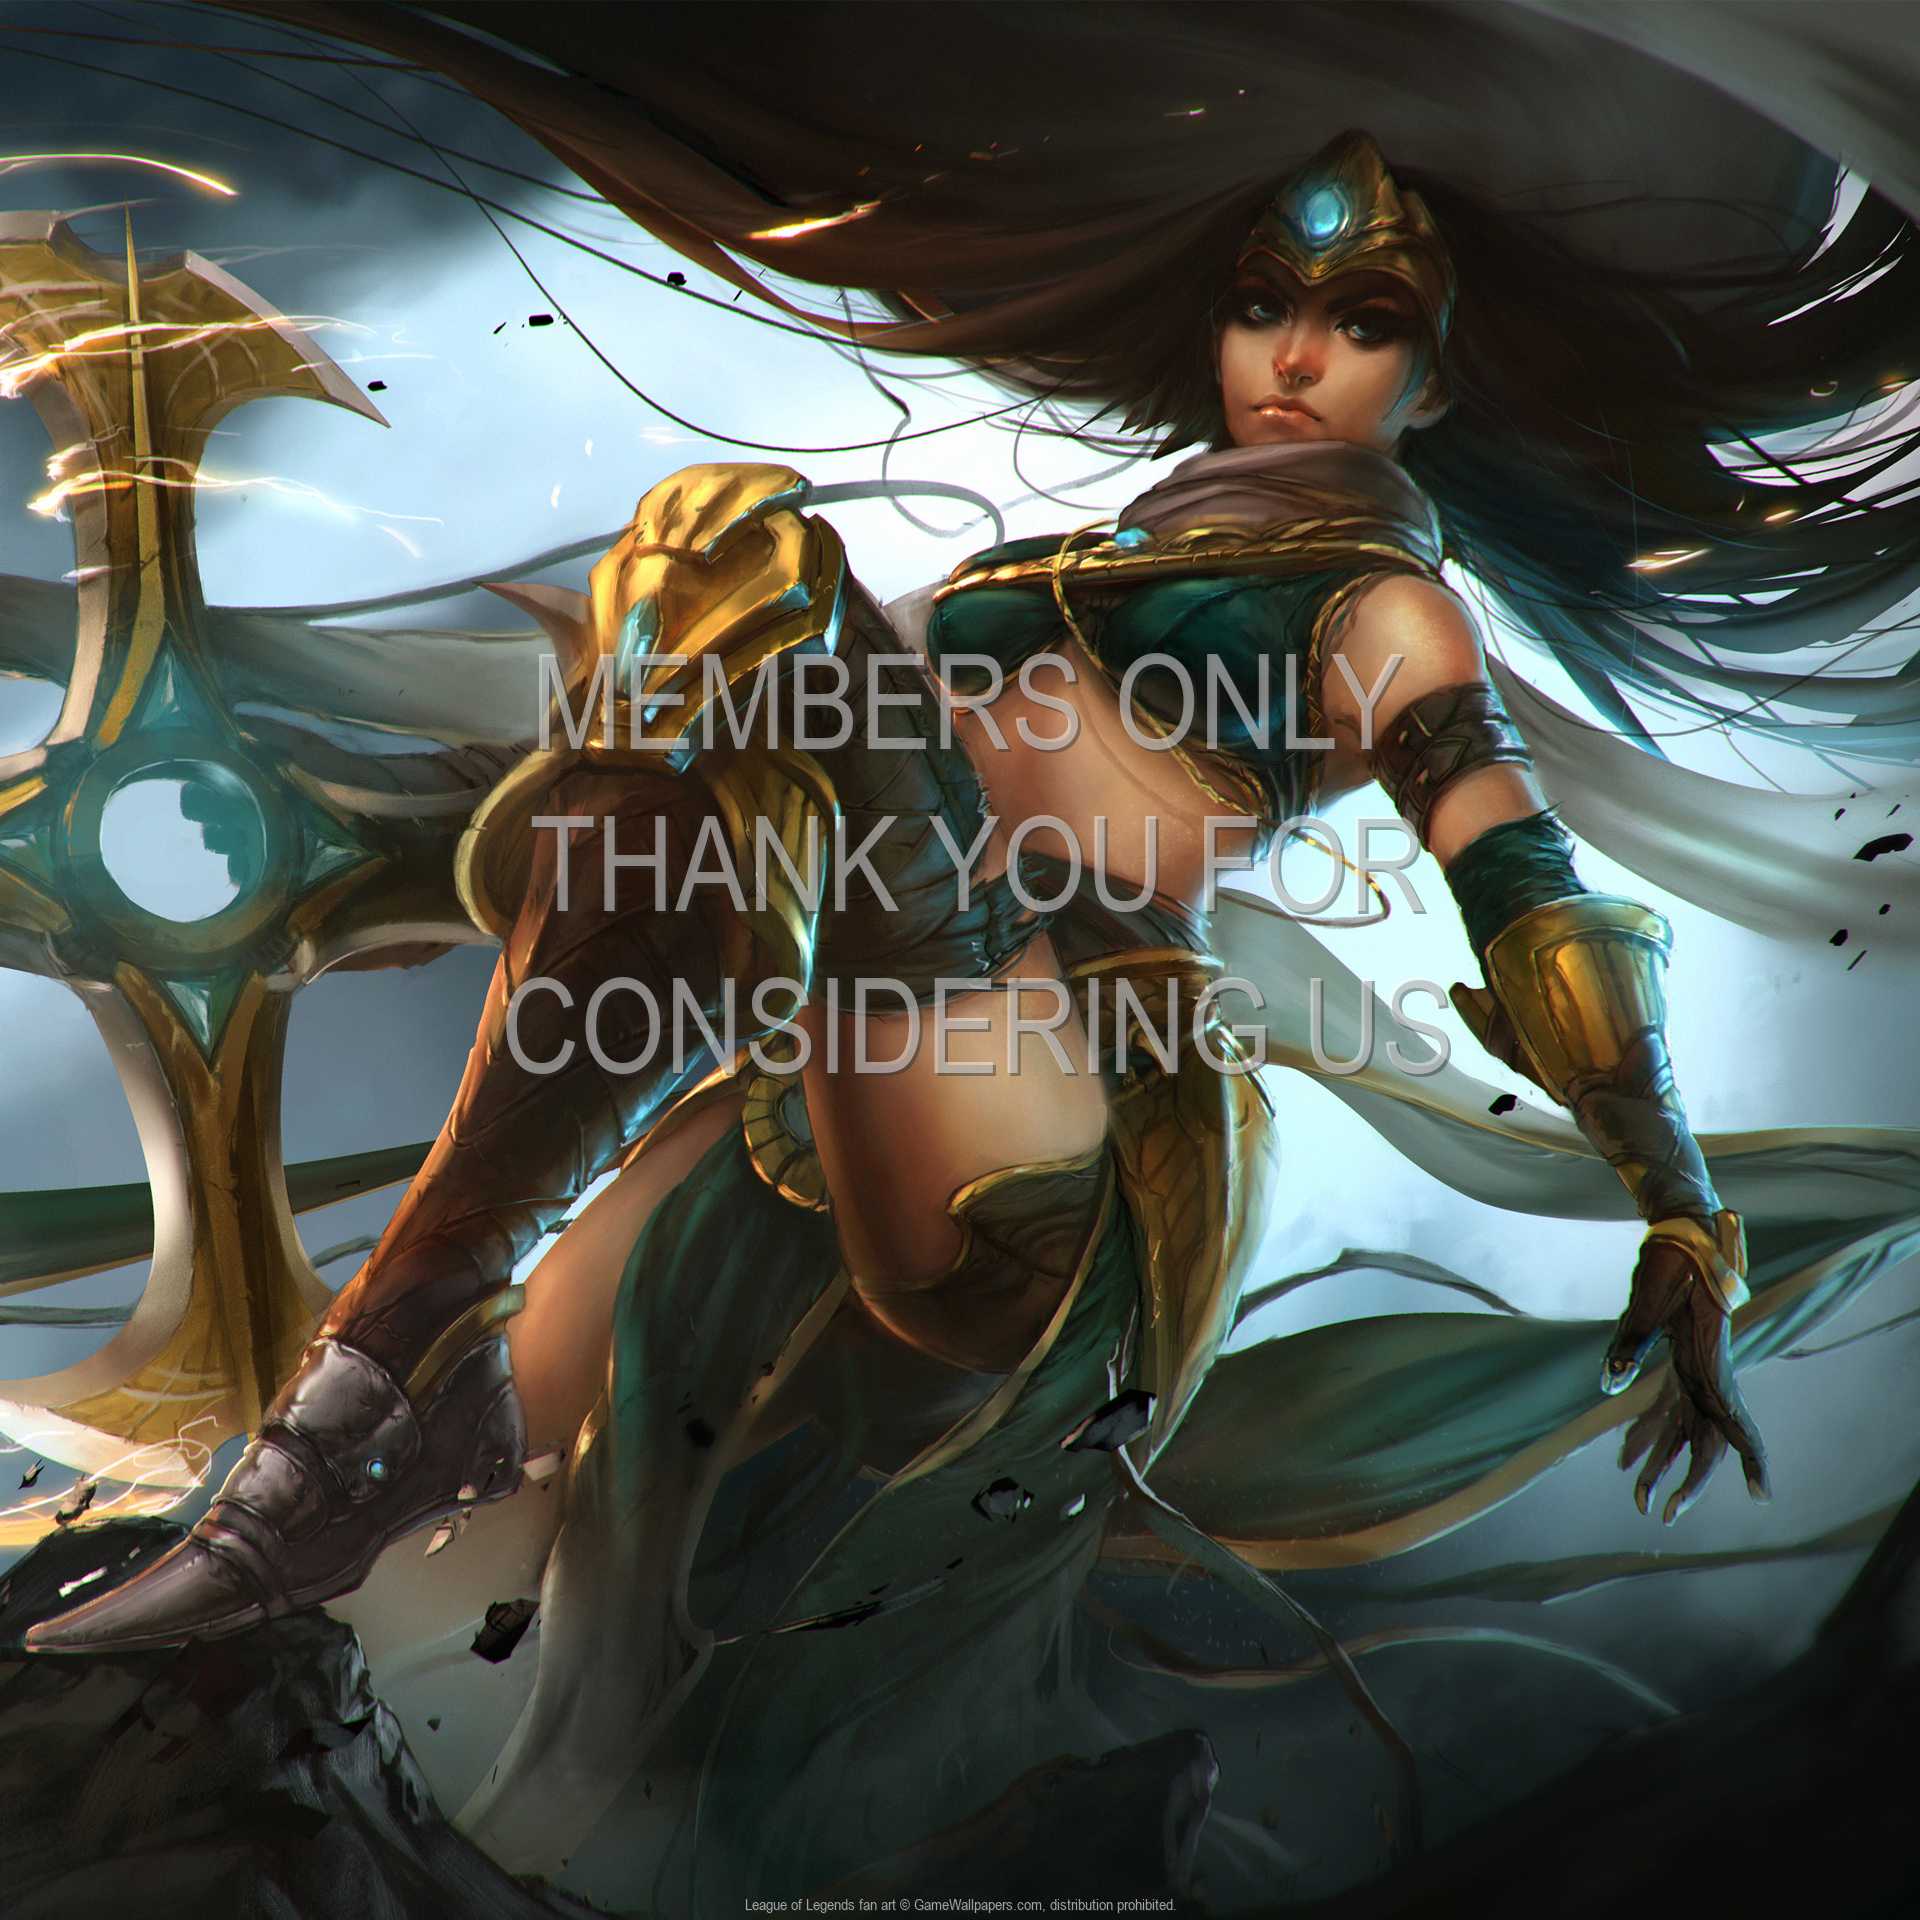 League of Legends fan art 1080p Horizontal Mobile wallpaper or background 04